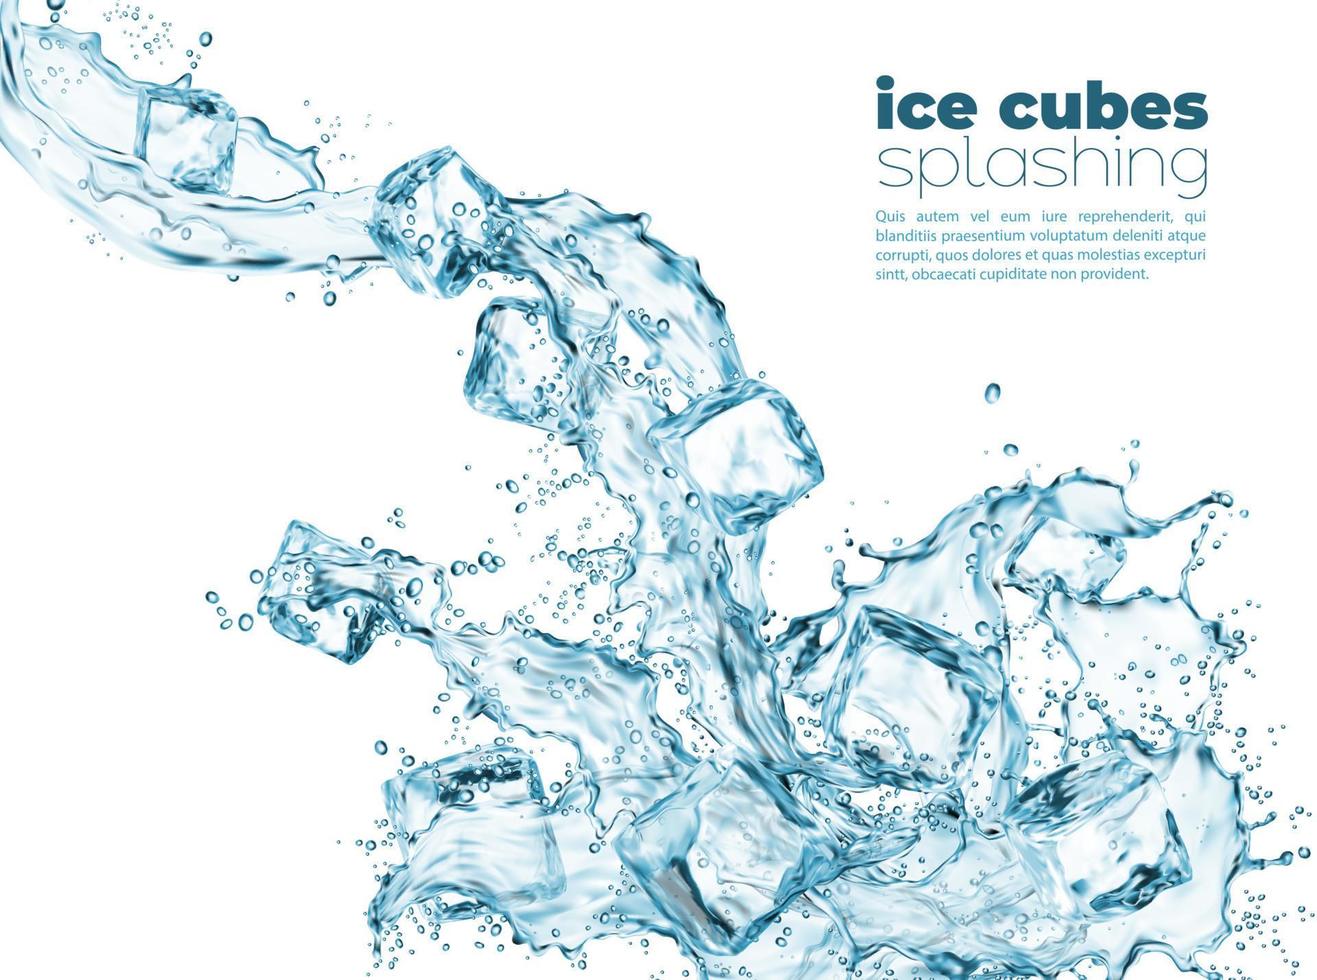 azul agua ola chapoteo y hielo cristal cubitos vector